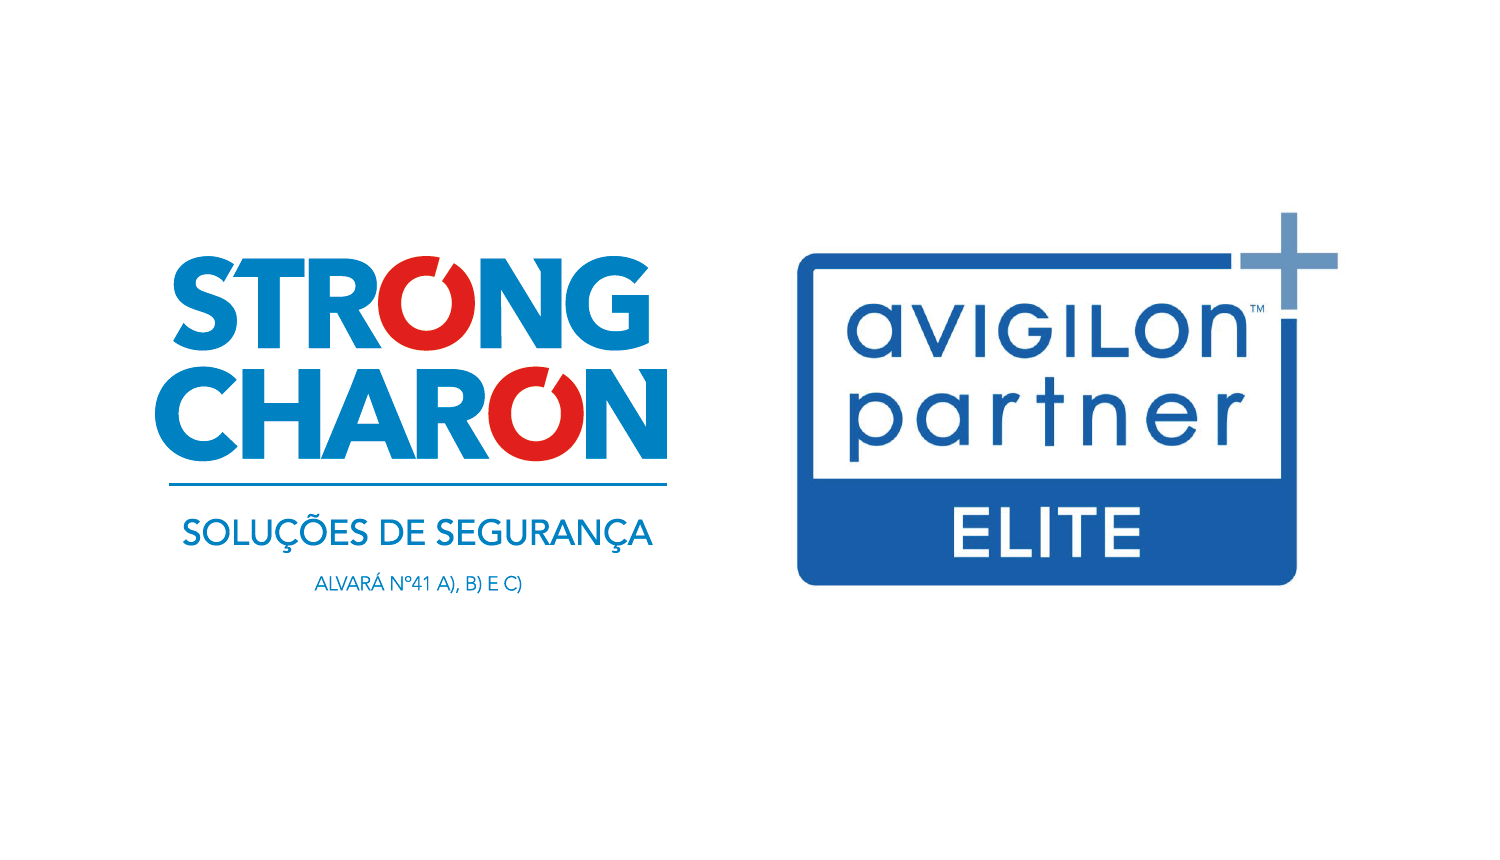 Elite Partner Avigilon, Motorola Solutions Certification